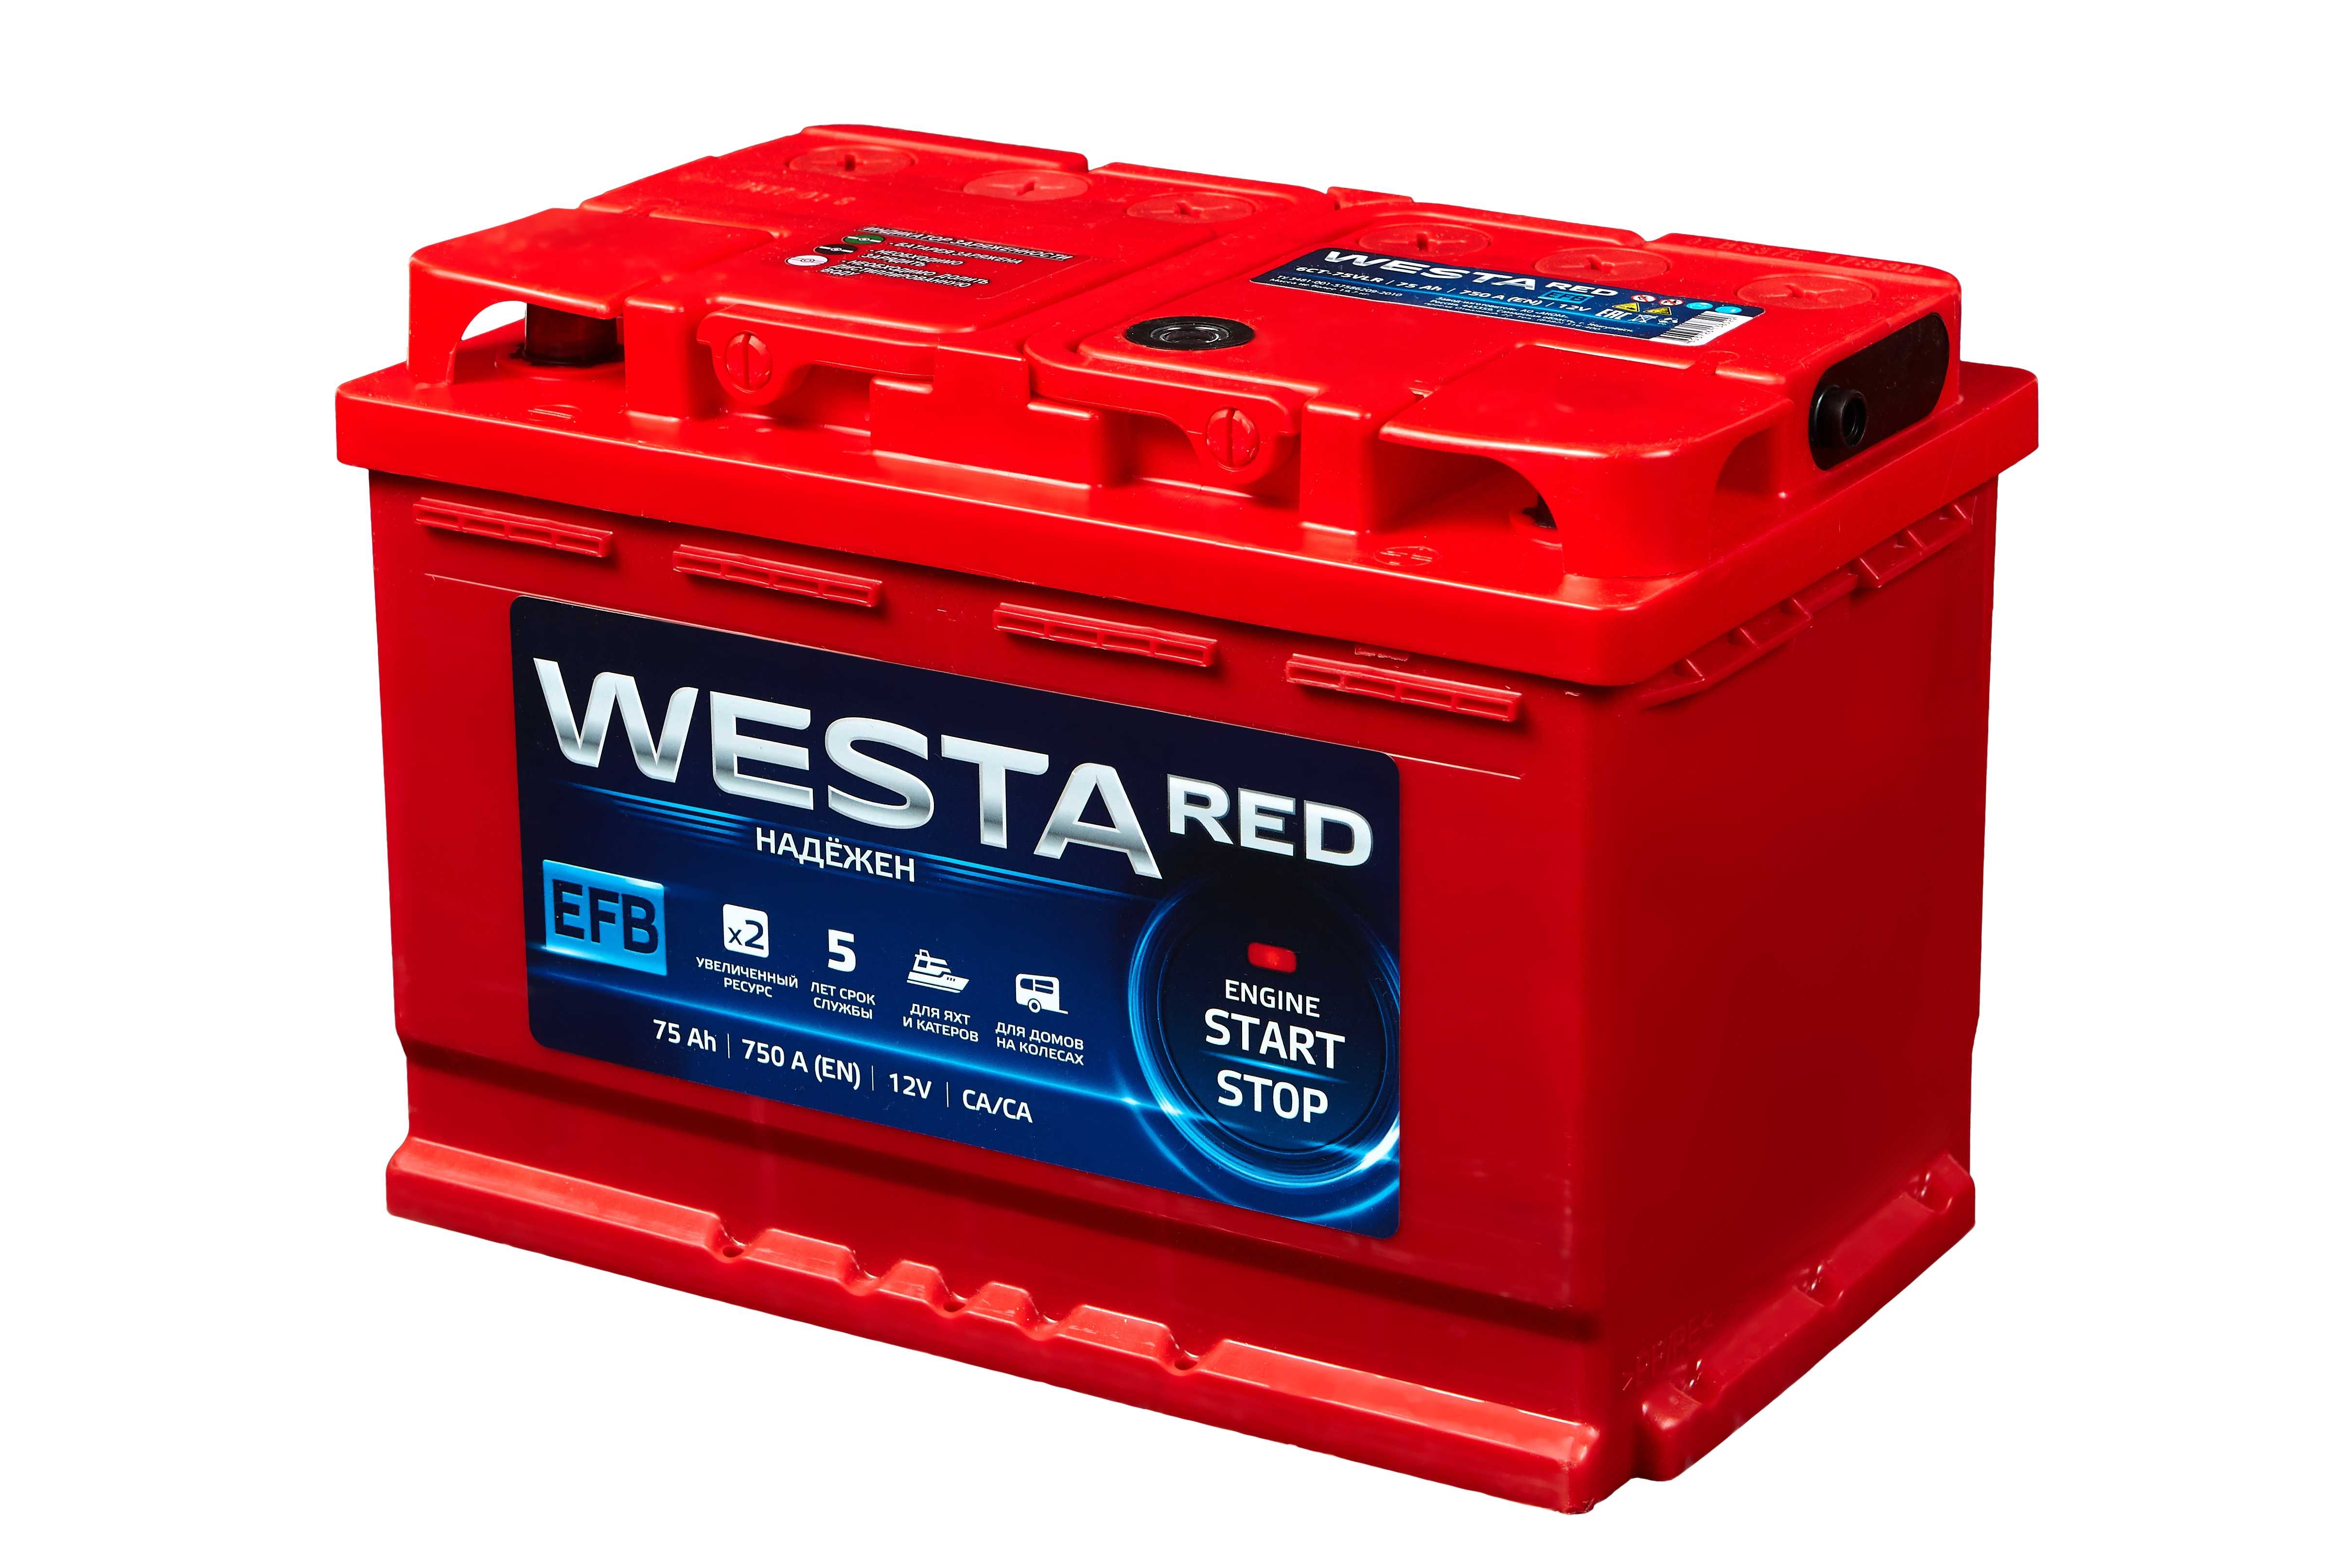 Westa Red 60 a, 640 a, 6 CT -60. Westa Red аккумулятор разбор. ТОО "Кайнар-АКБ" Vesta Red 77ah. Русские аккумуляторы автомобильные